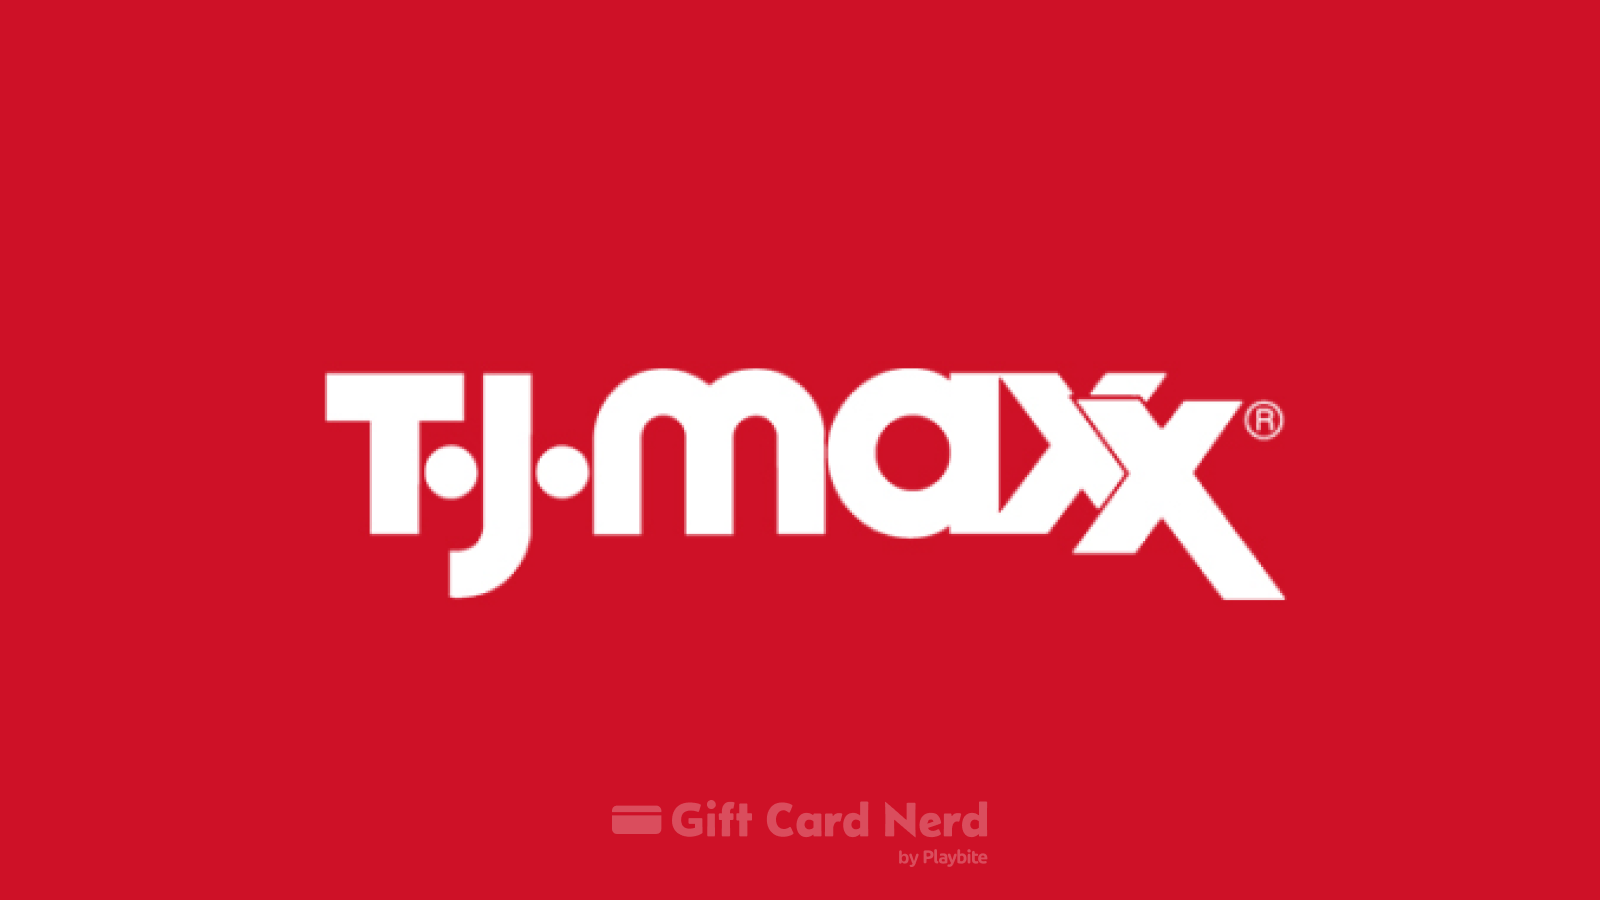 Can I Use a TJ Maxx Gift Card on Cash App?